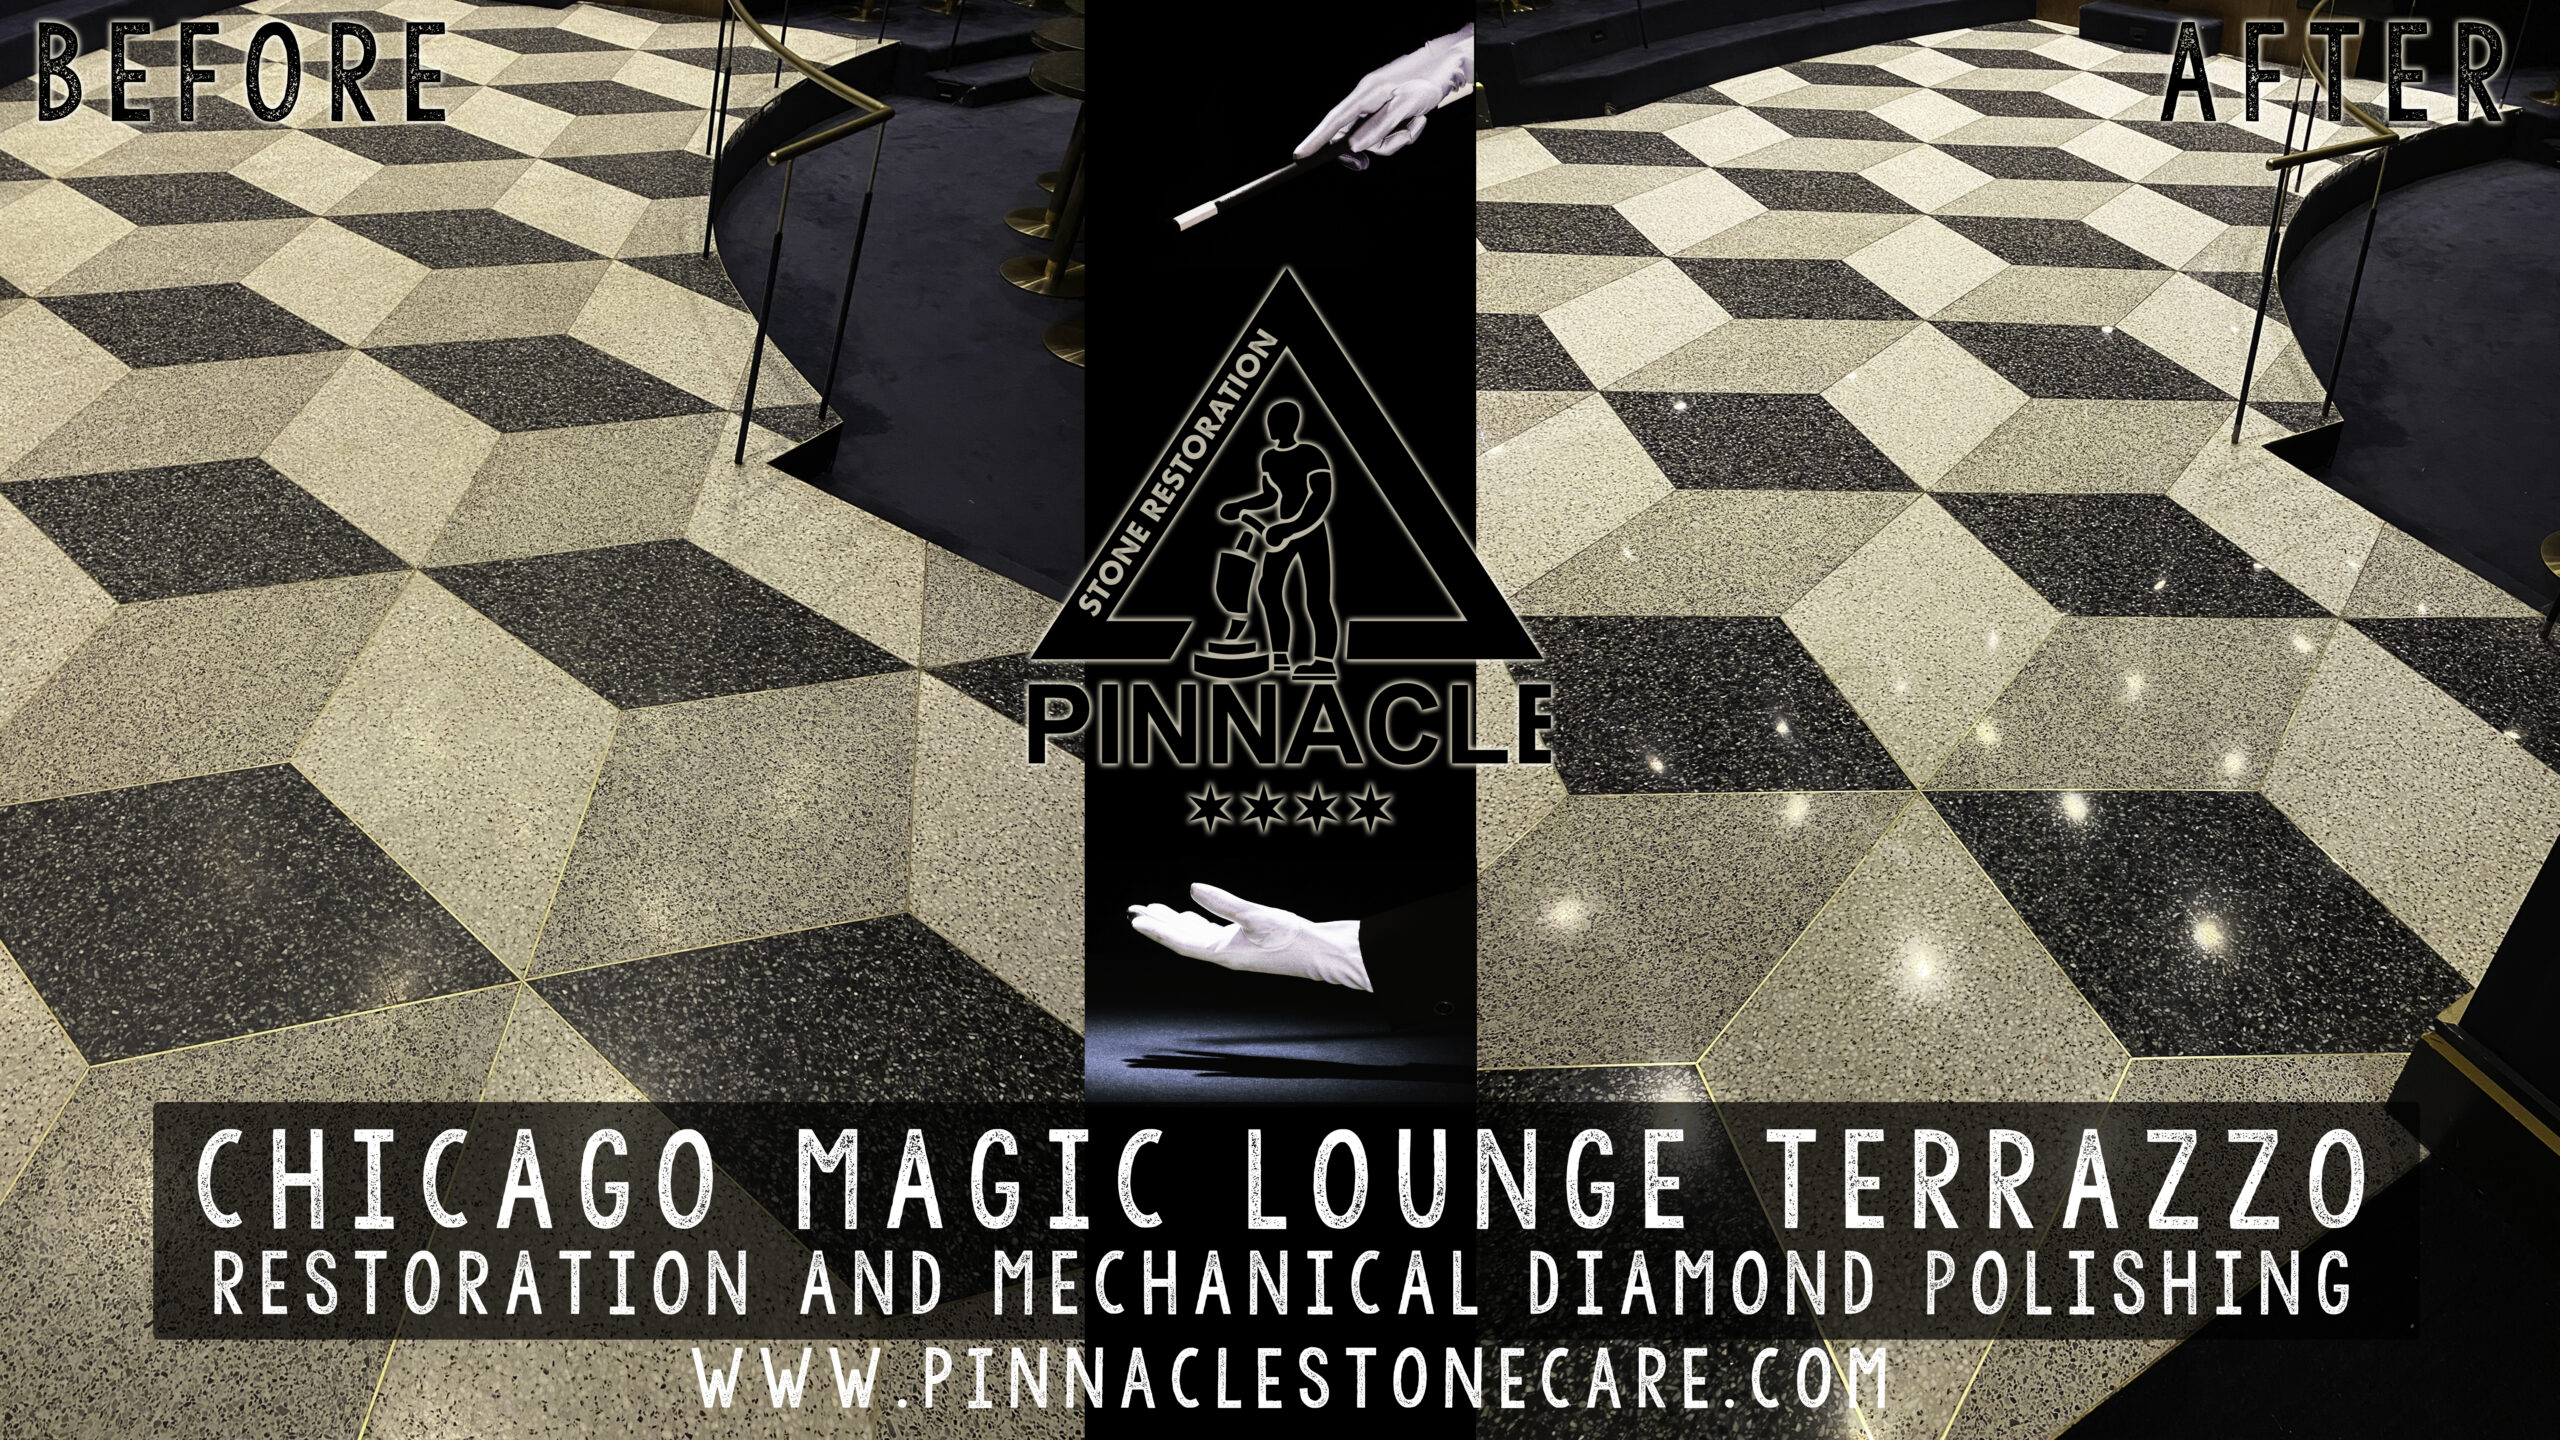 Chicago Magic Lounge terrazzo restoration and mechanical diamond polishing